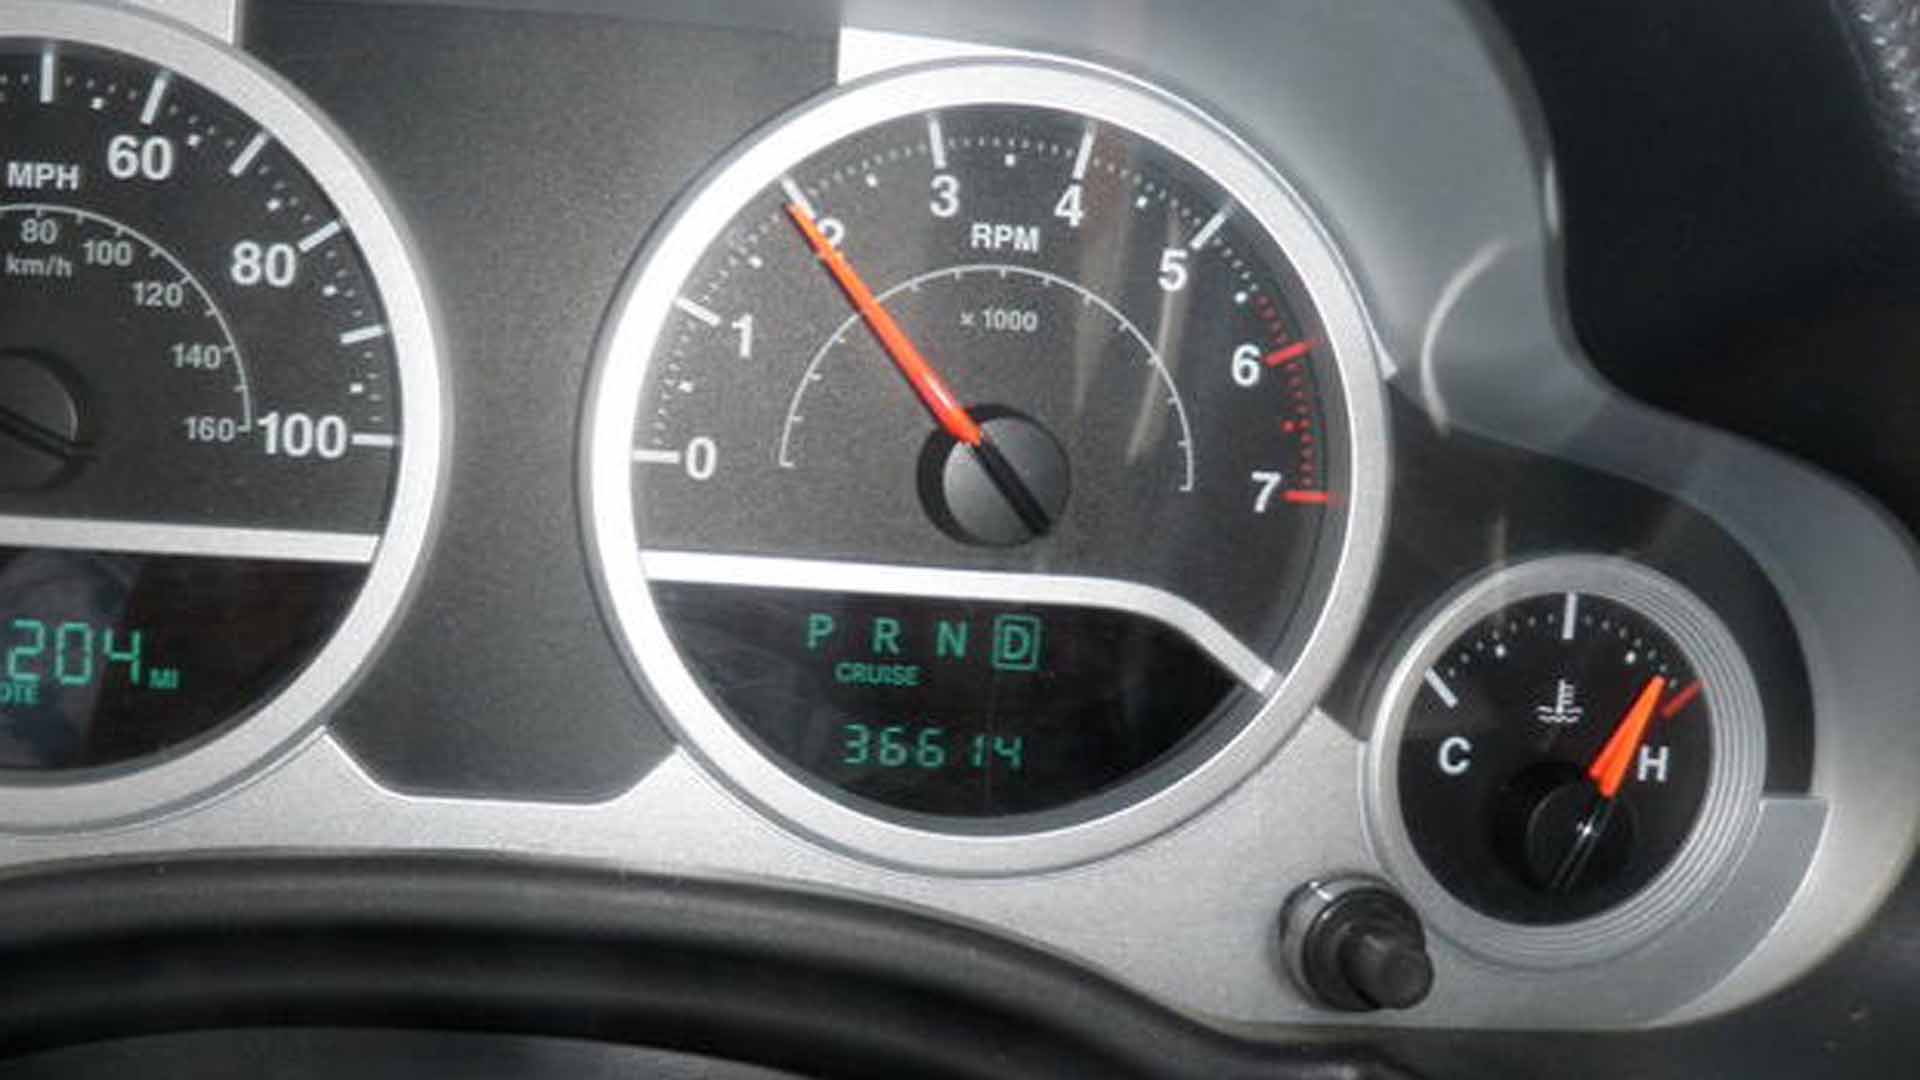 Arriba 50+ imagen 2008 jeep wrangler overheating